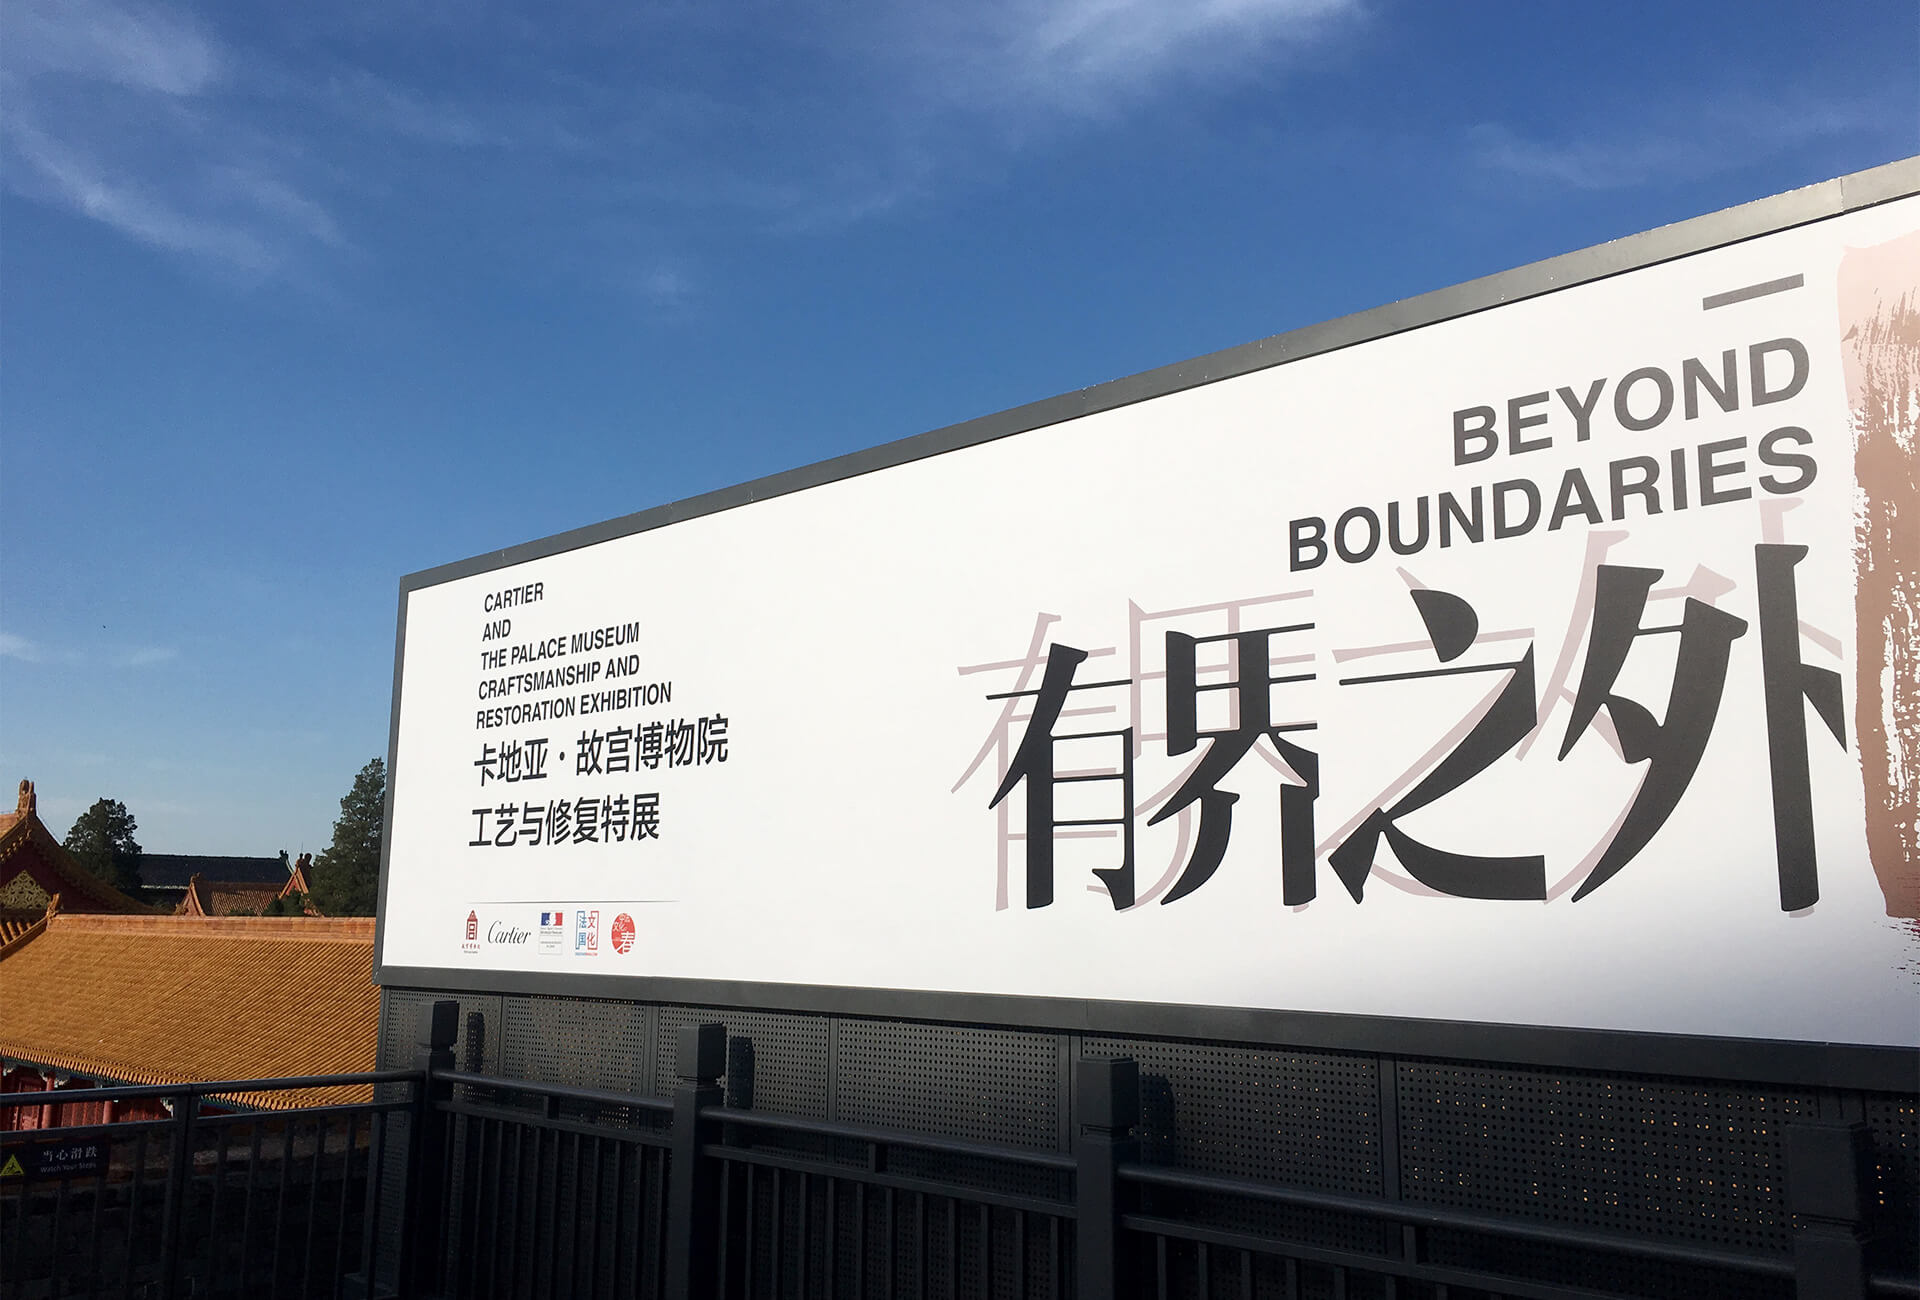 An exhibition beyond boundaries – FHH 